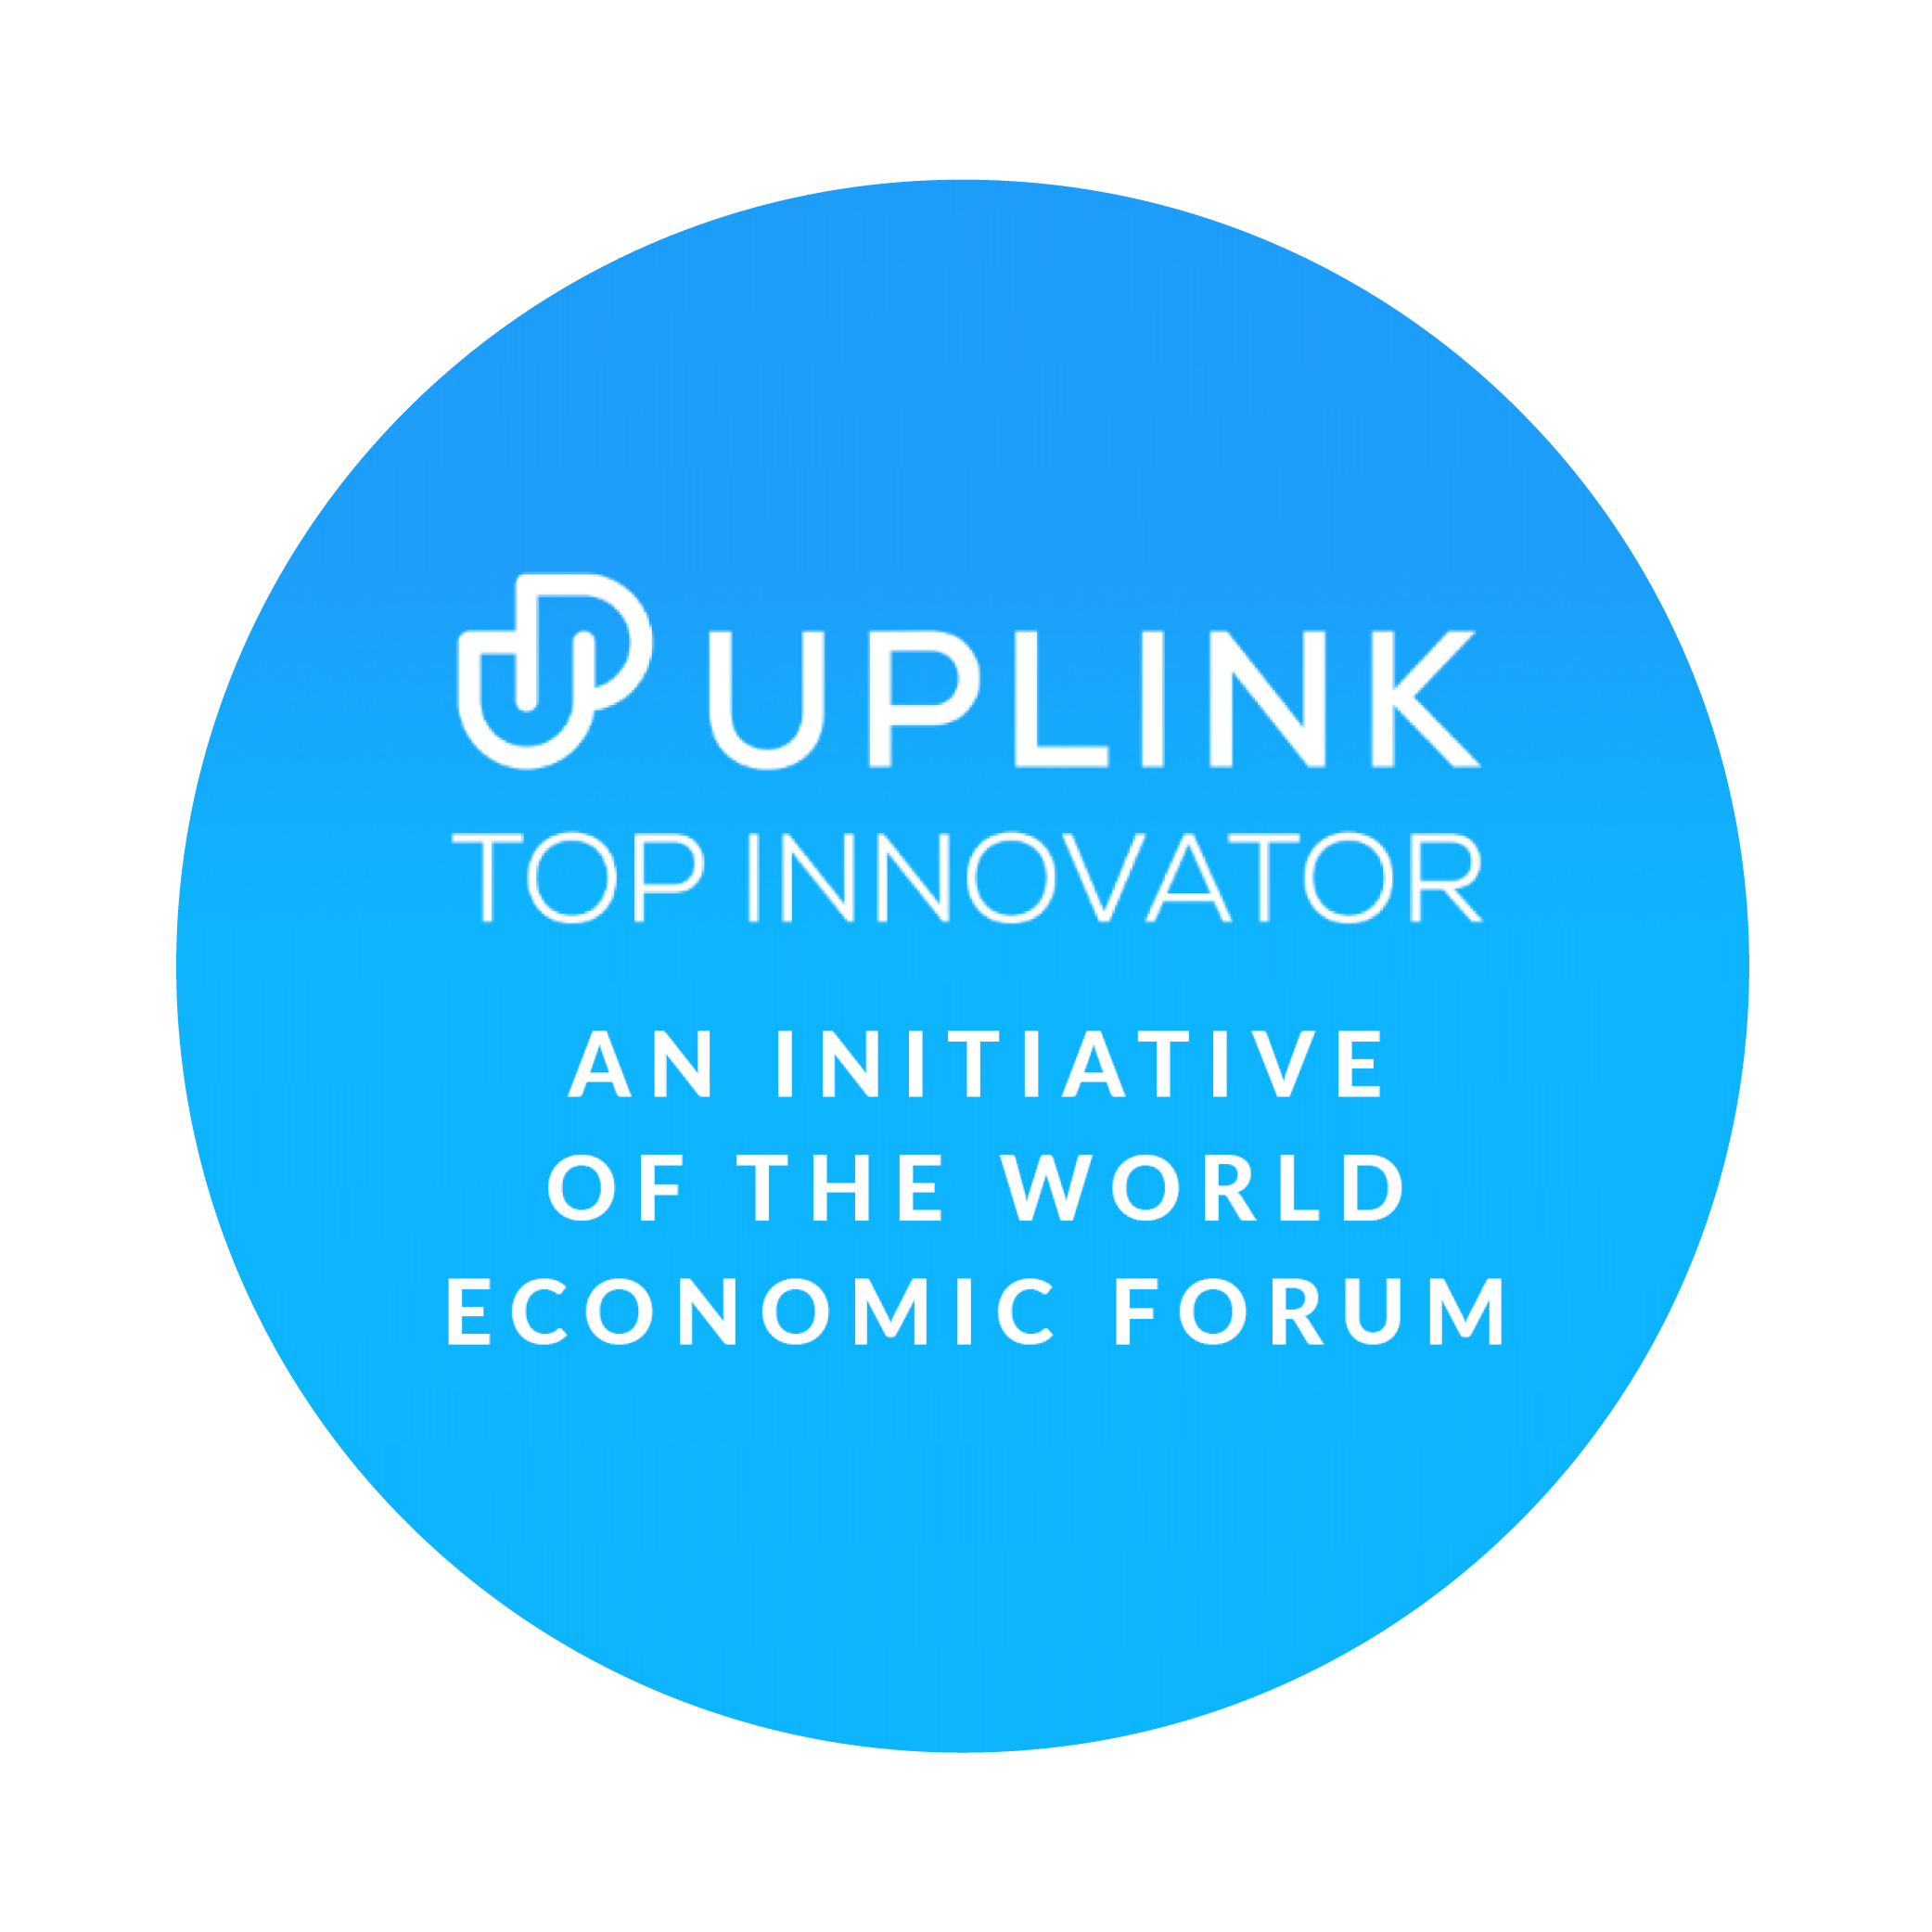 World Economic Forum - Top Innovator